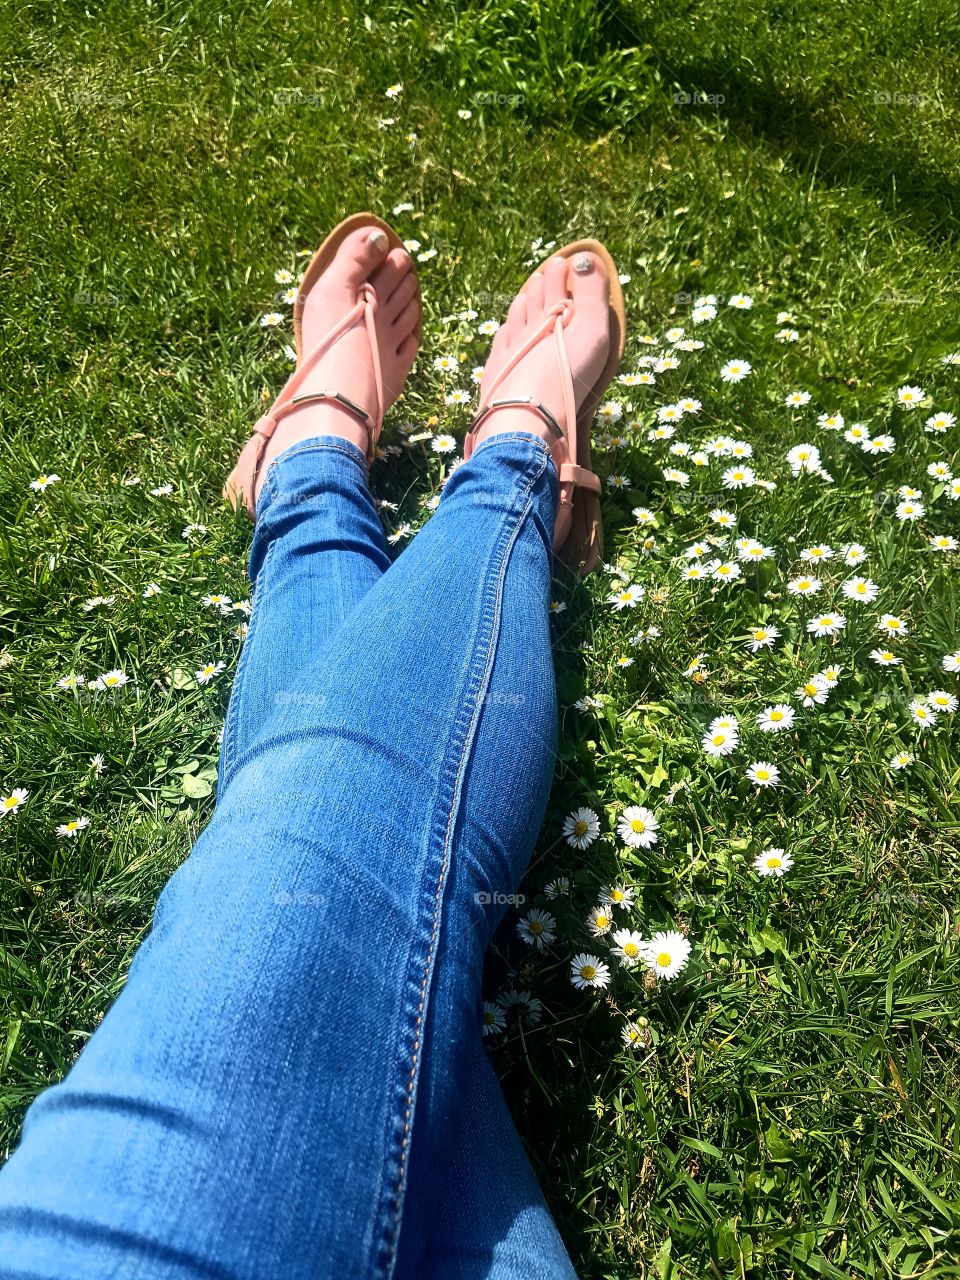 Feet in daisys